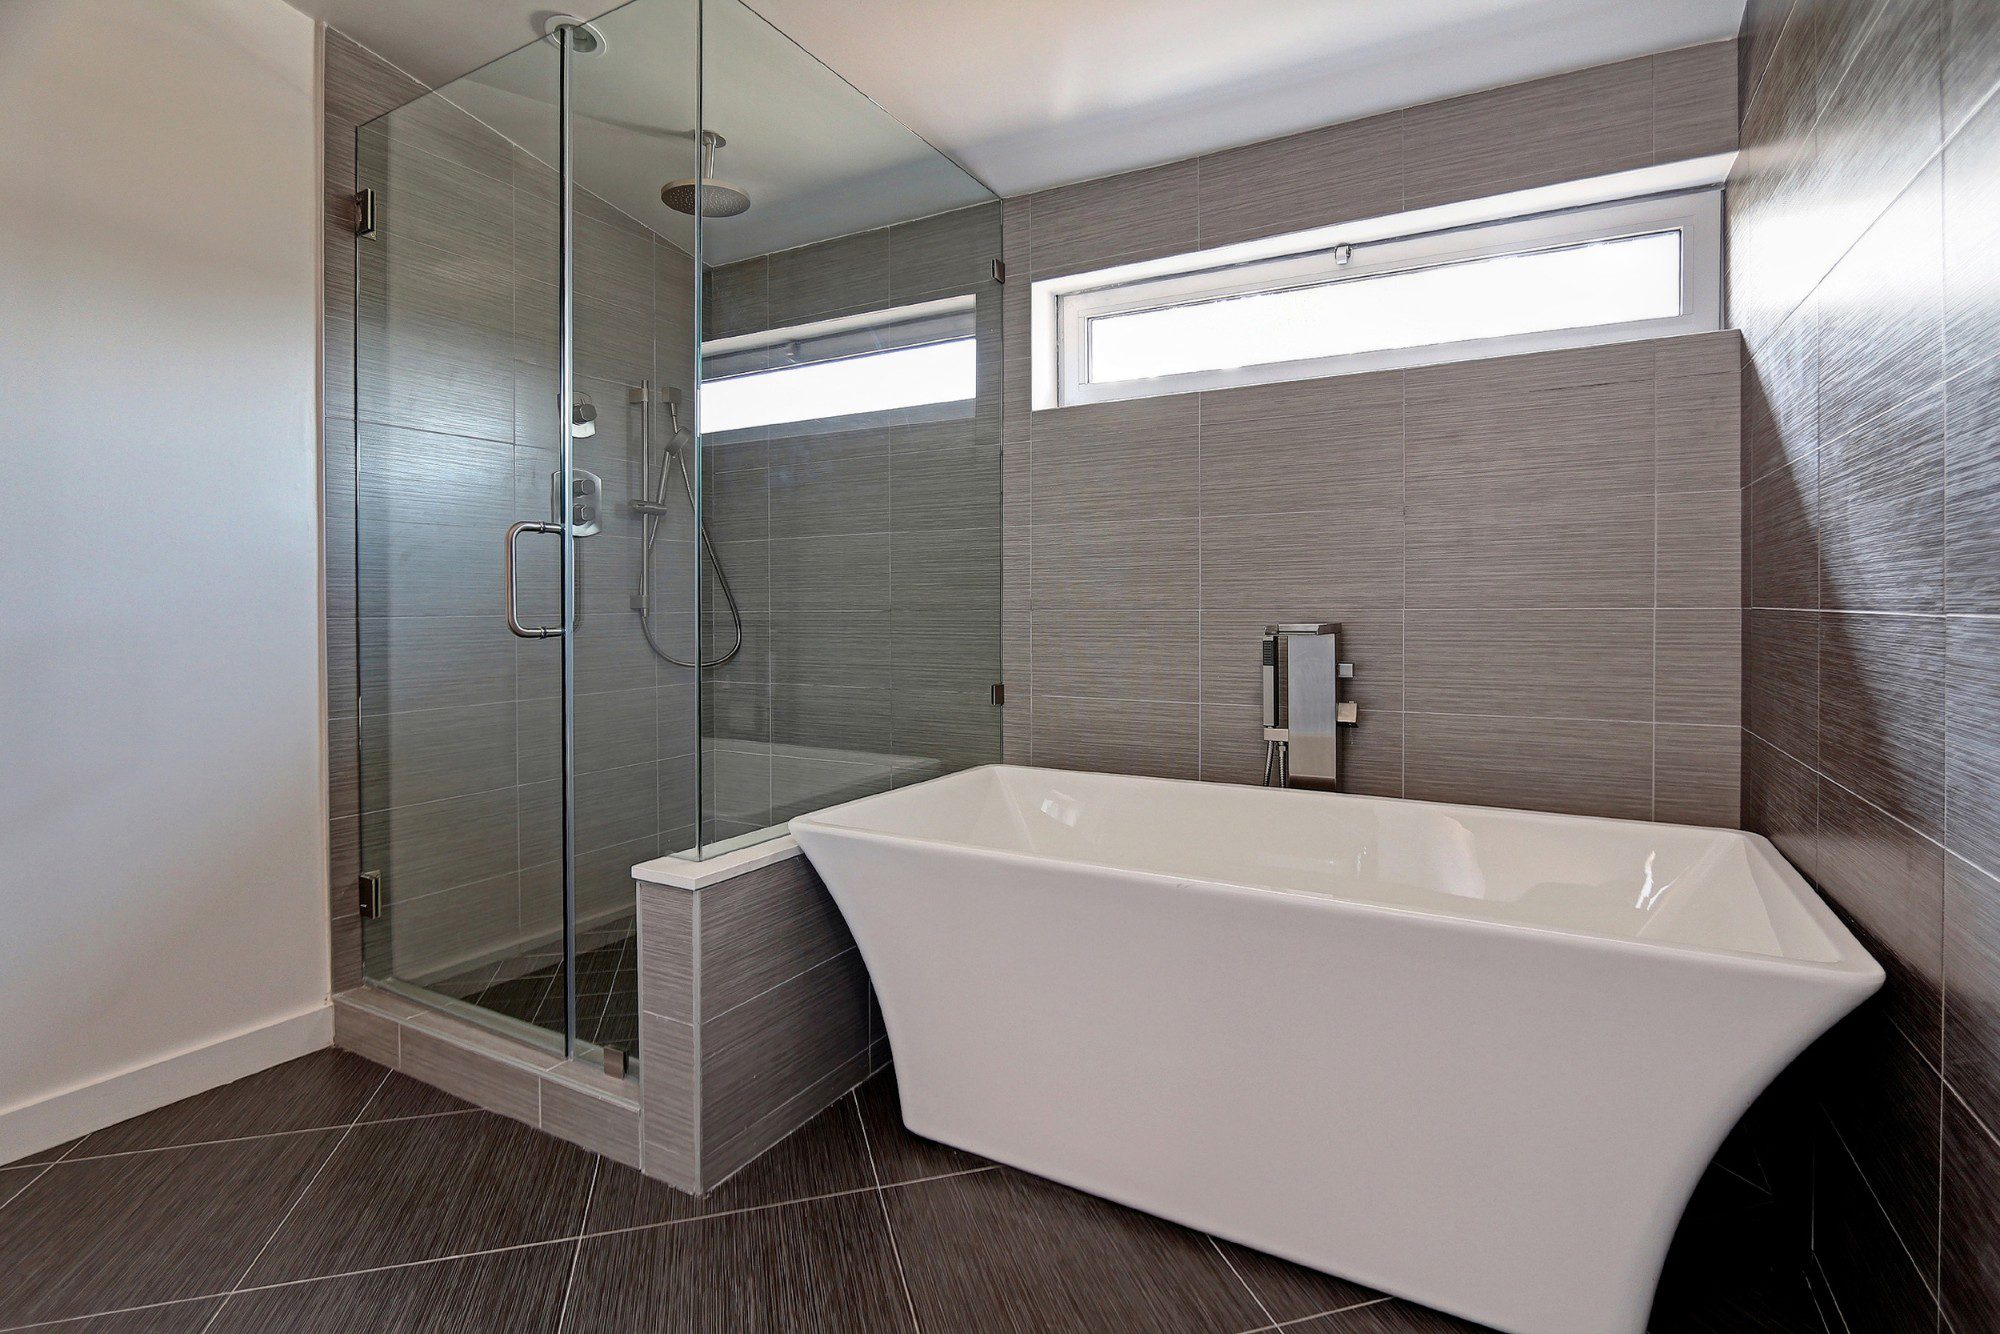 Stand alone tub and shower combo in custom minimalist bathroom